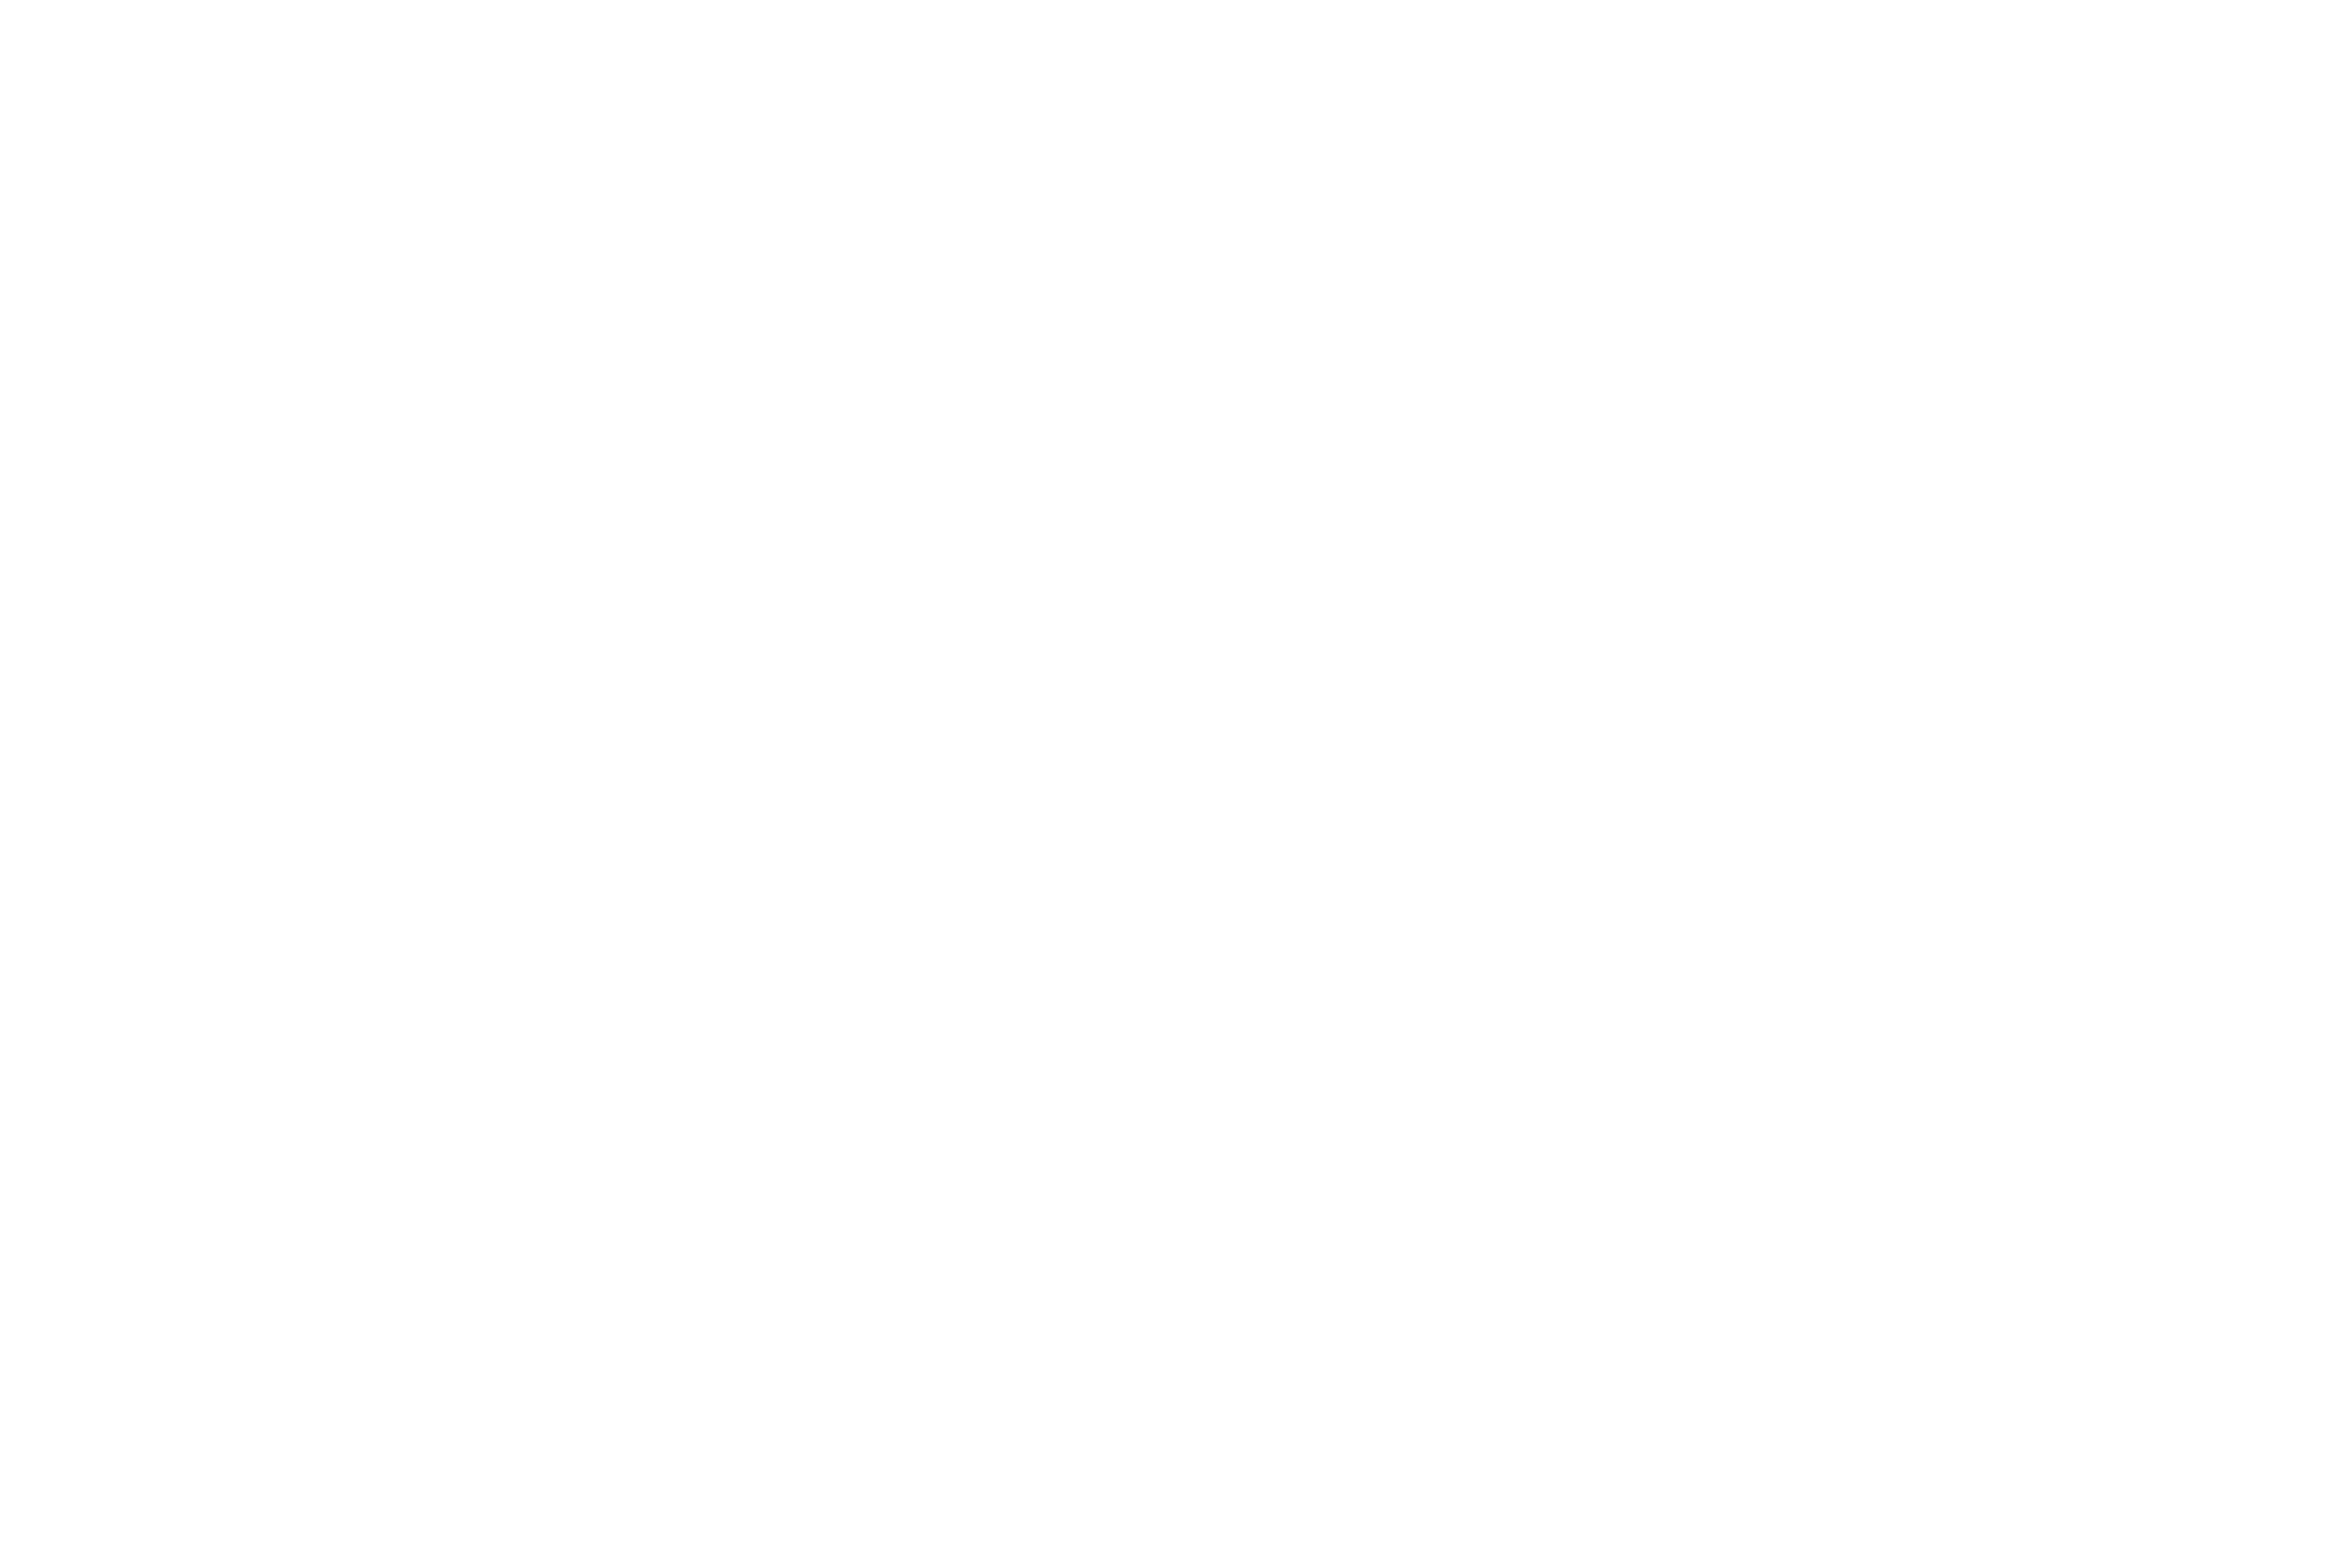 Auto Trader Group plc logo